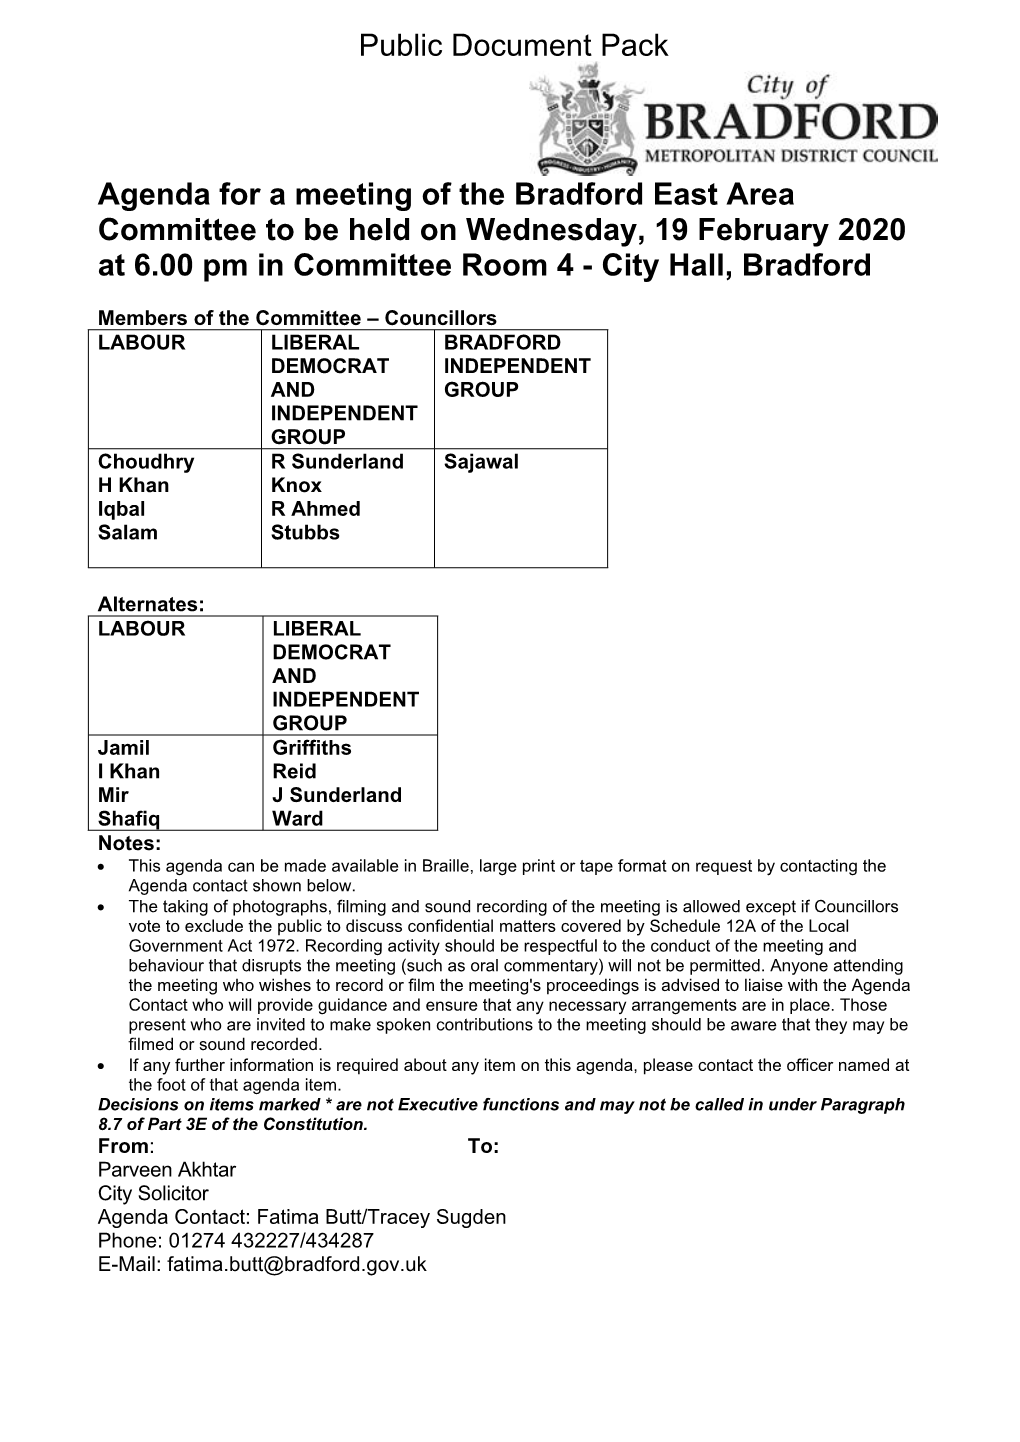 (Public Pack)Agenda Document for Bradford East Area Committee, 19